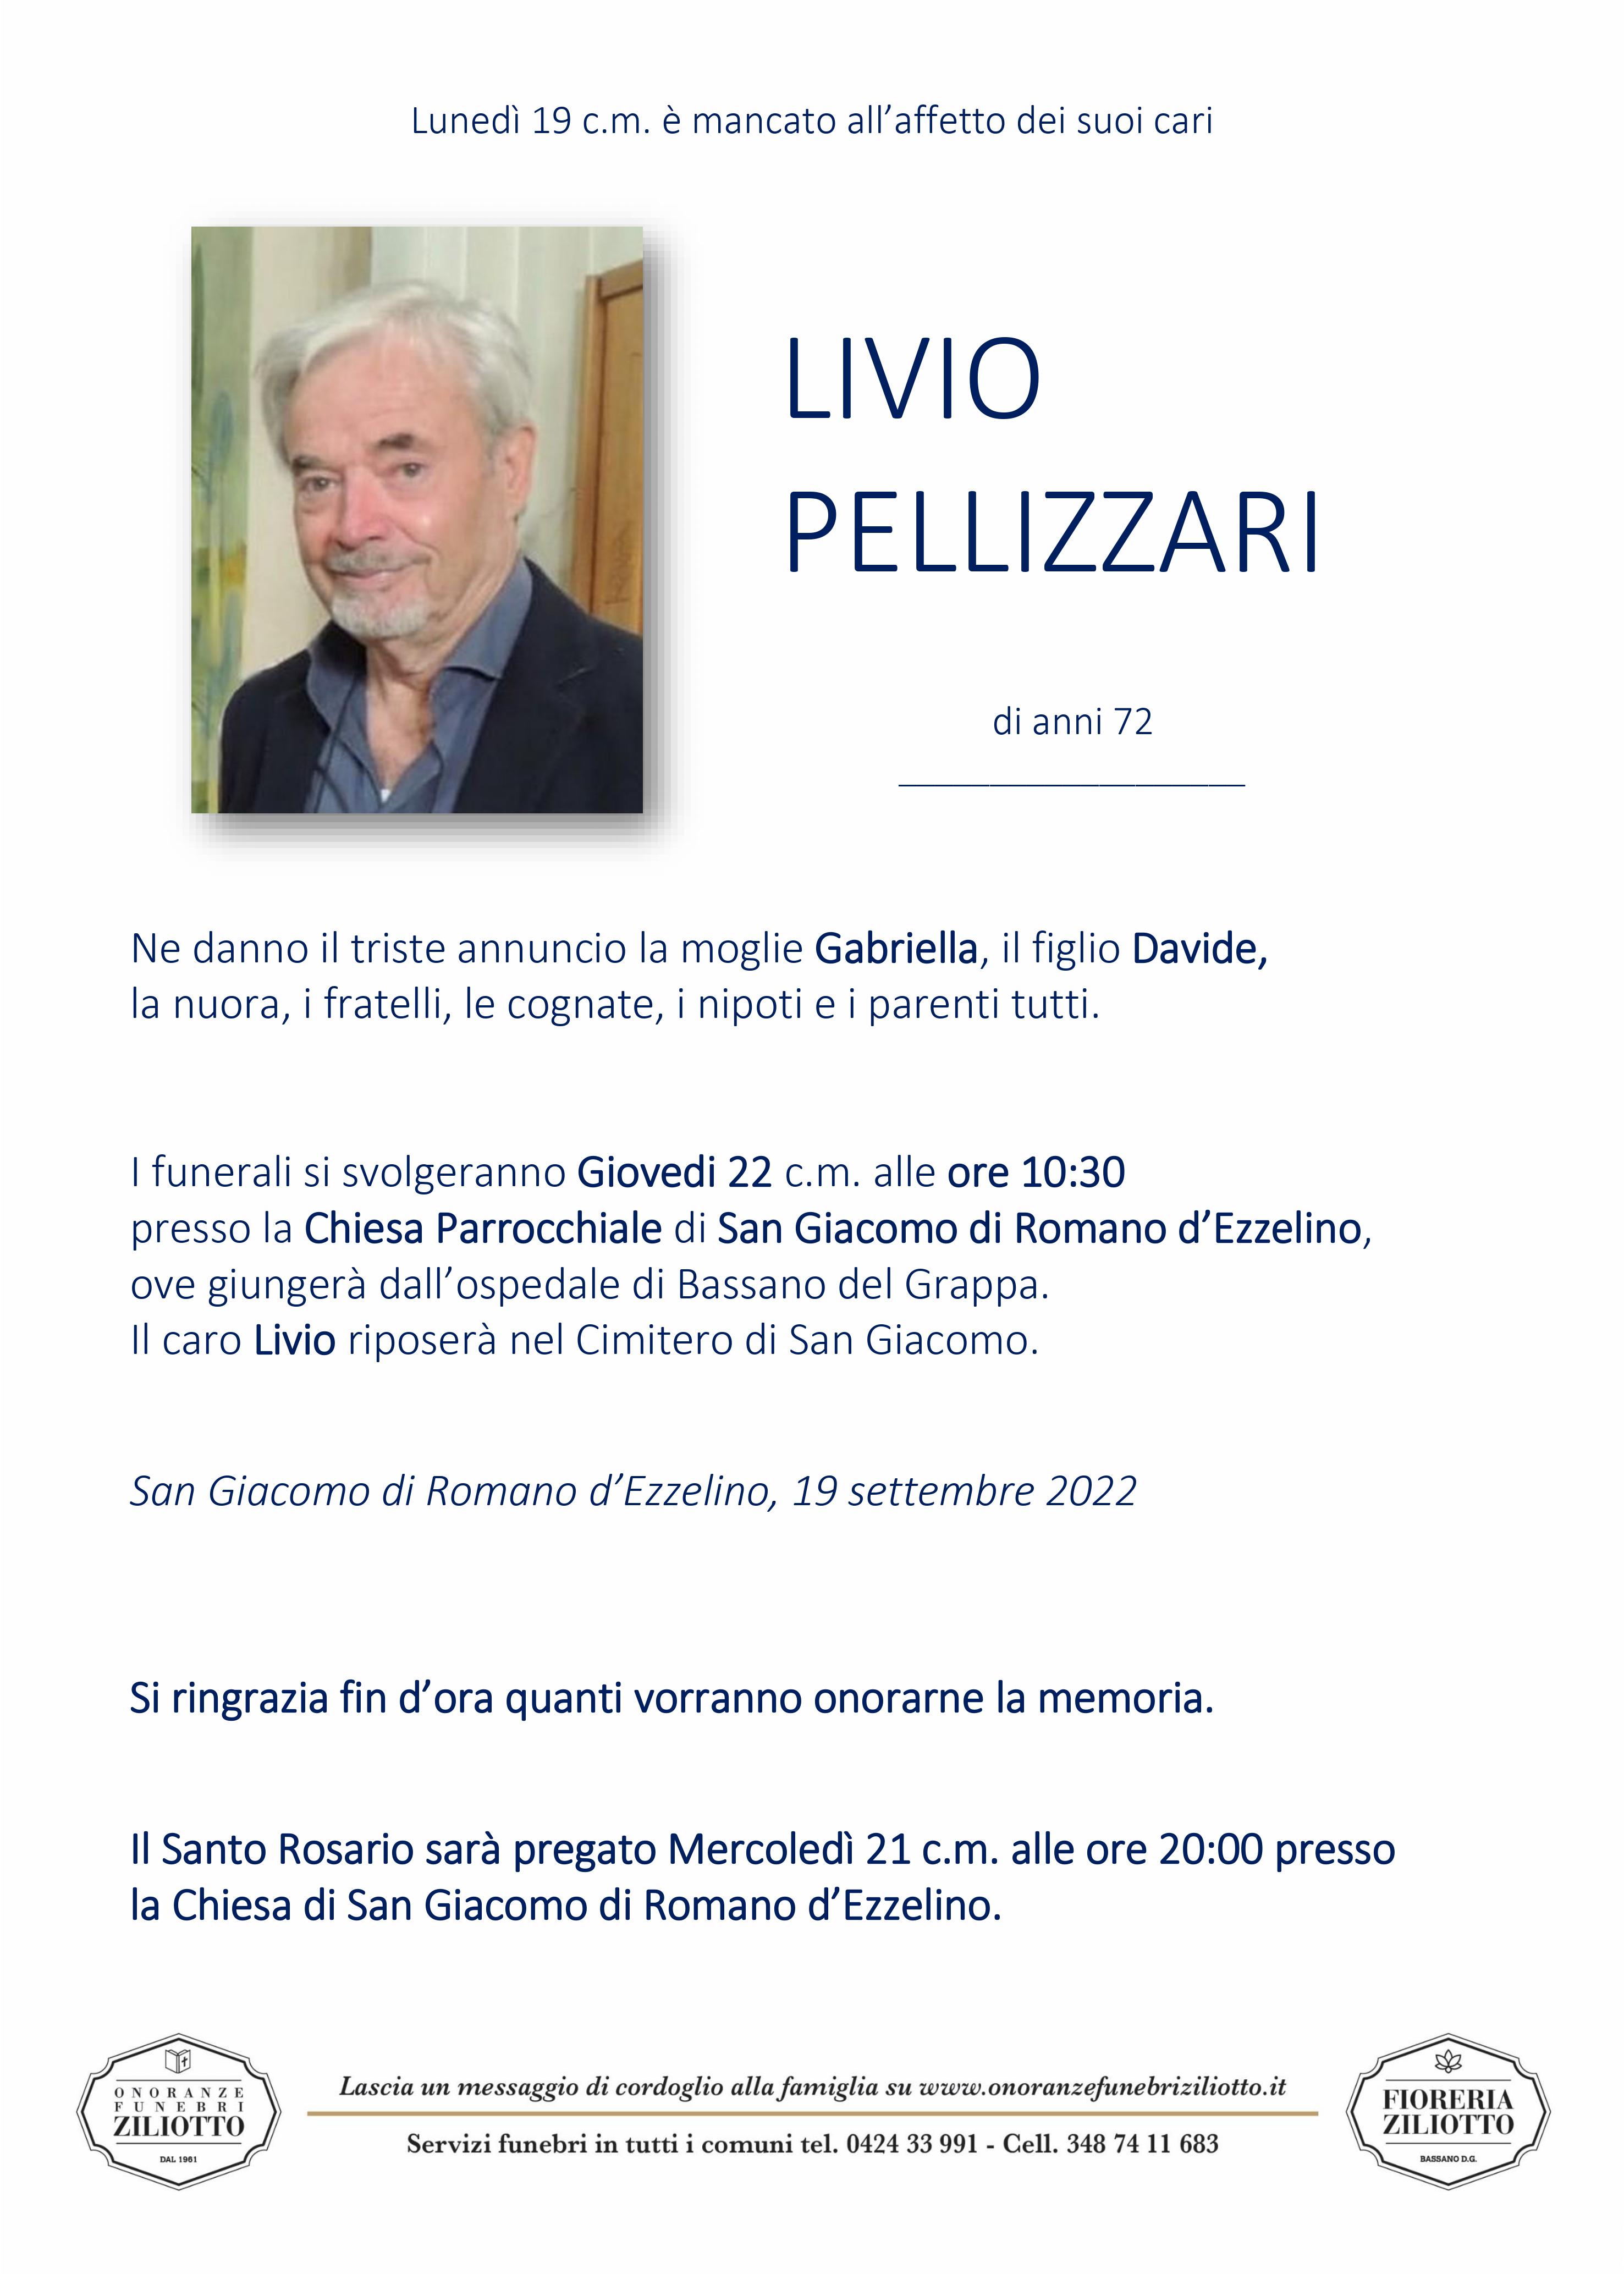 Livio Pellizzari - 72 anni - Mussolente